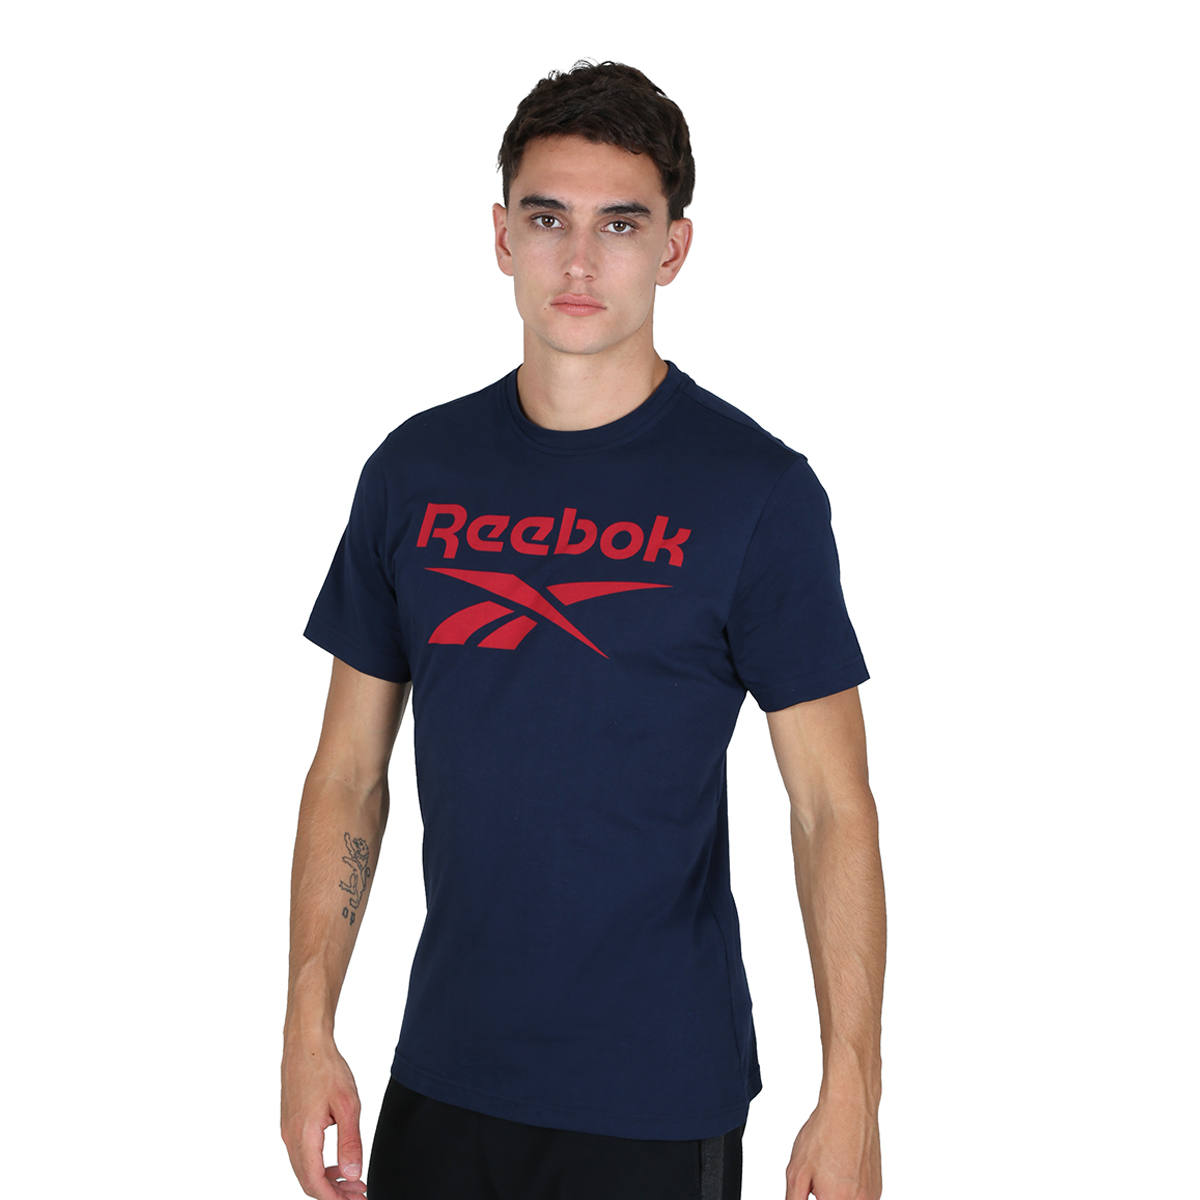 Camiseta Reebok Stacked,  image number null